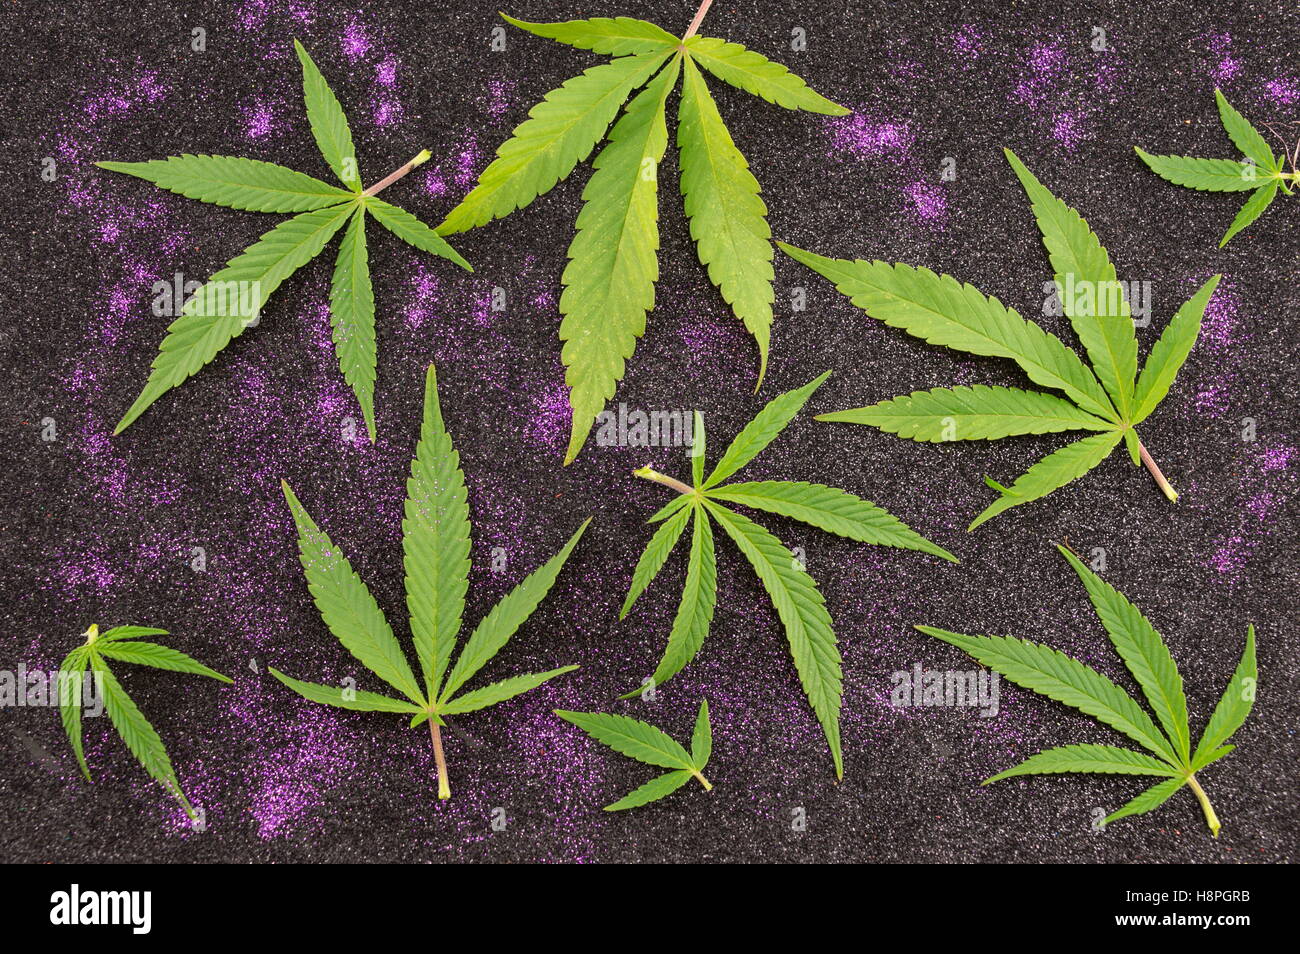 Bande de plants de marijuana sur fond brillant foncé Banque D'Images